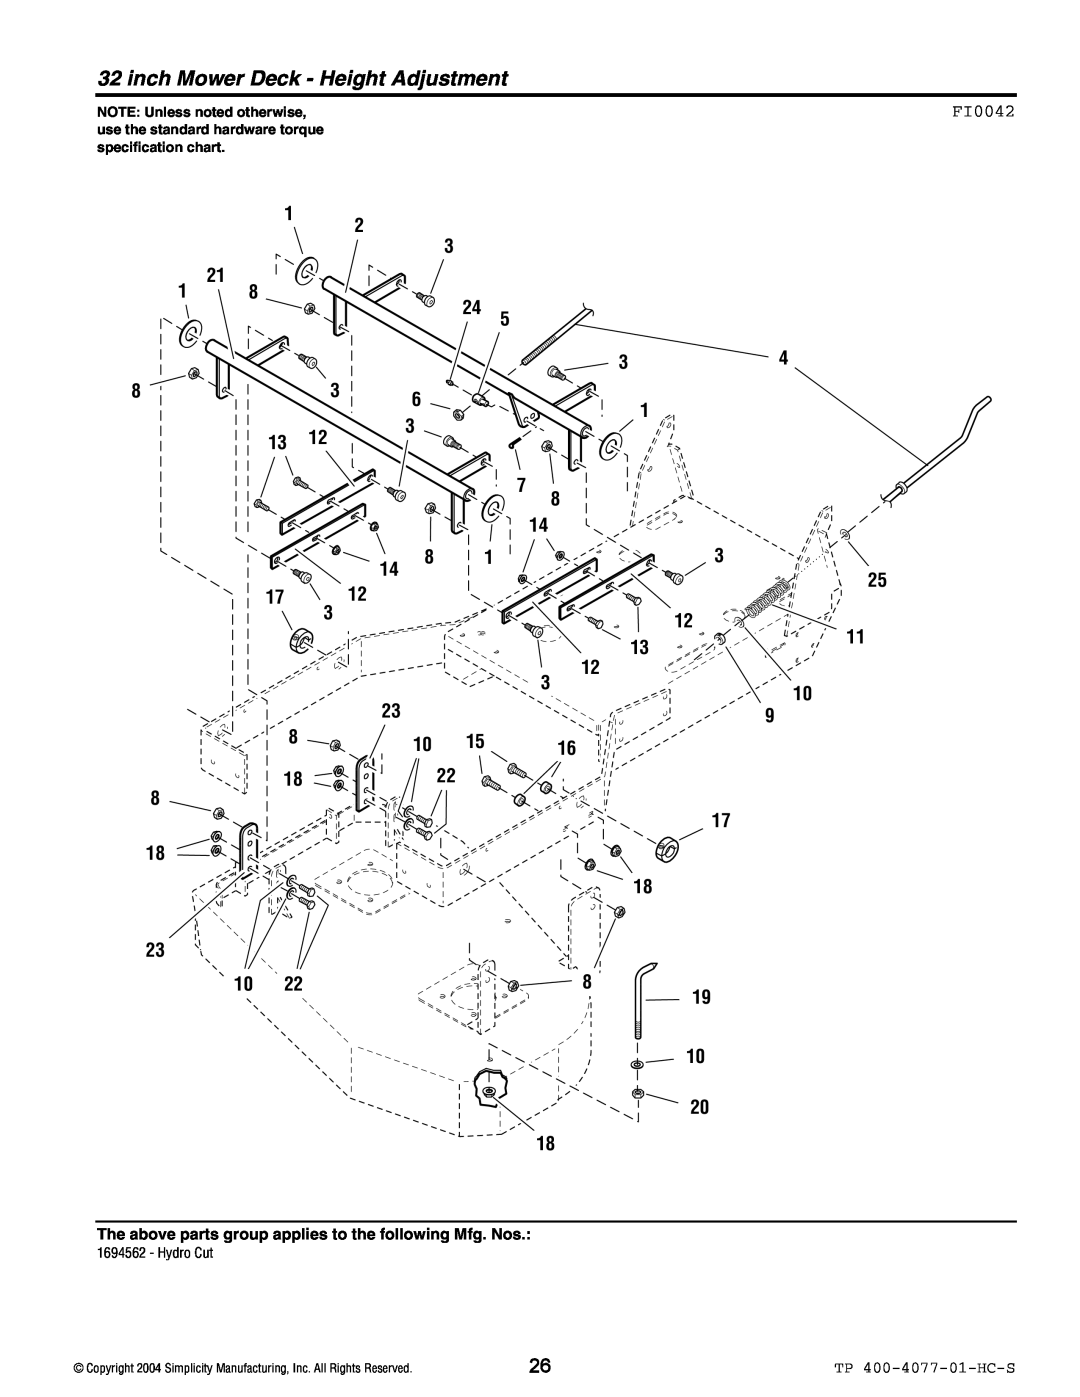 Simplicity 1694562, Hydro Cut Series manual inch Mower Deck - Height Adjustment, FI0042 